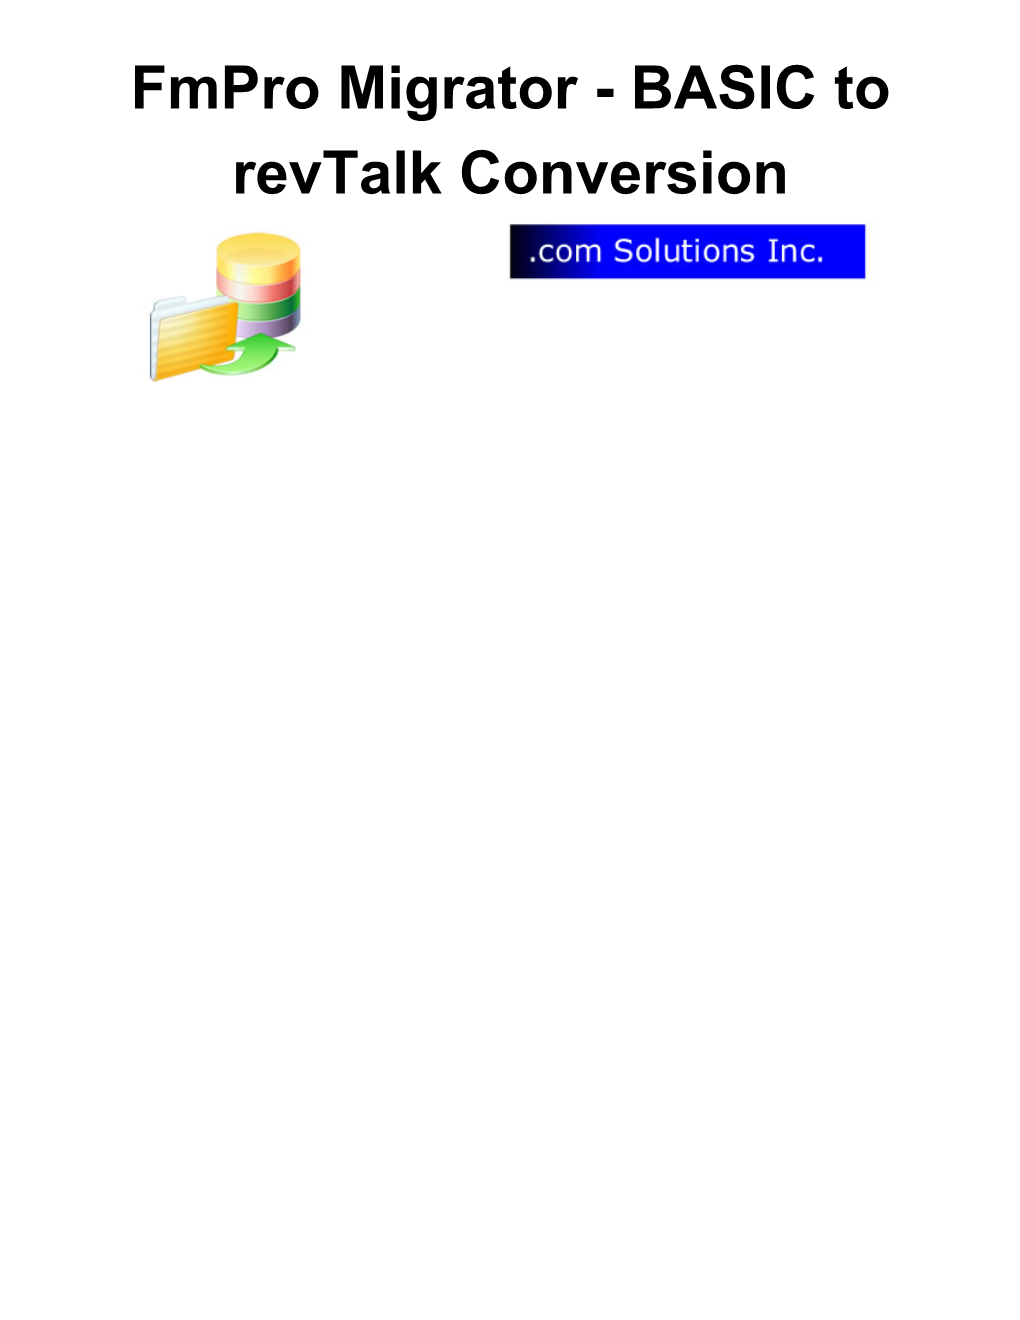 BASIC to Revtalk Conversion 1 BASIC to Revtalk Conversion